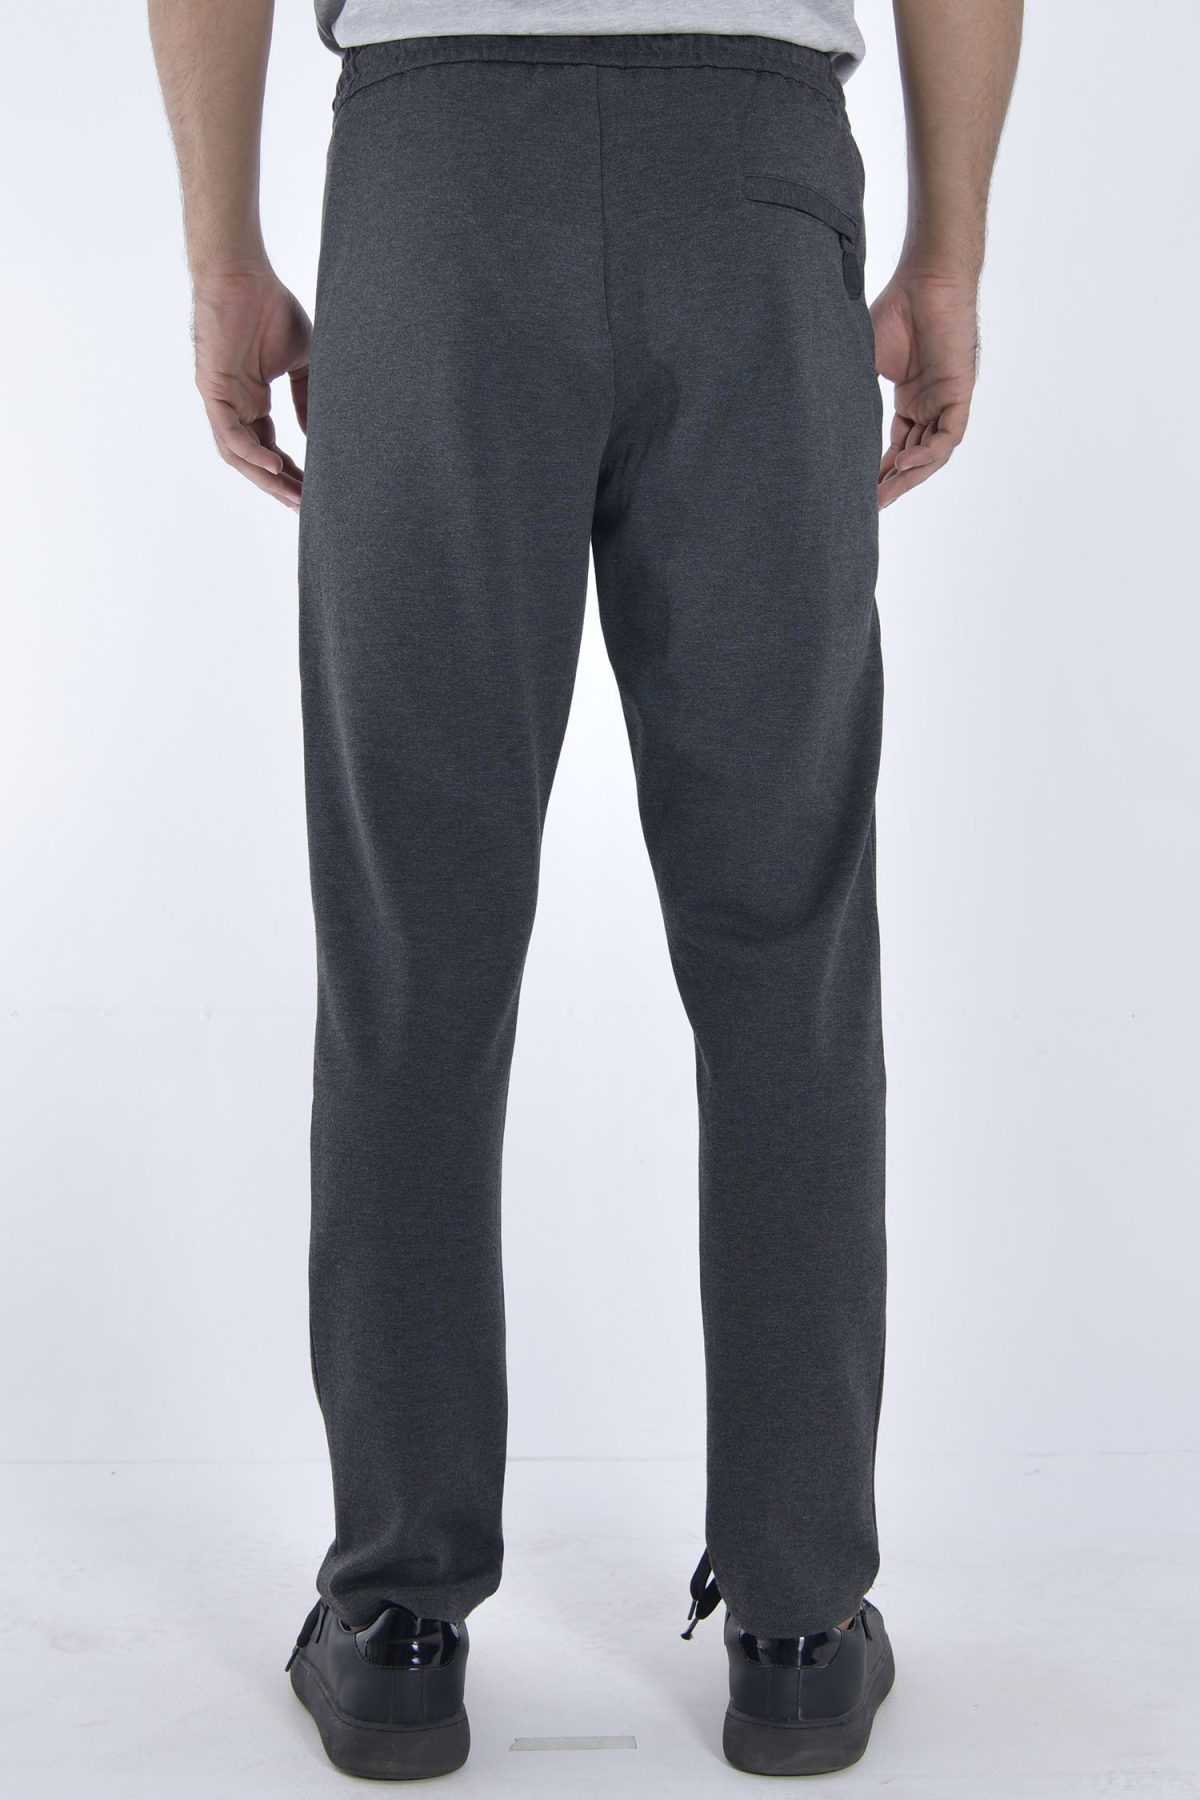 Buy Men's Dark Grey Slim Fit Track Pants | Cotstyle